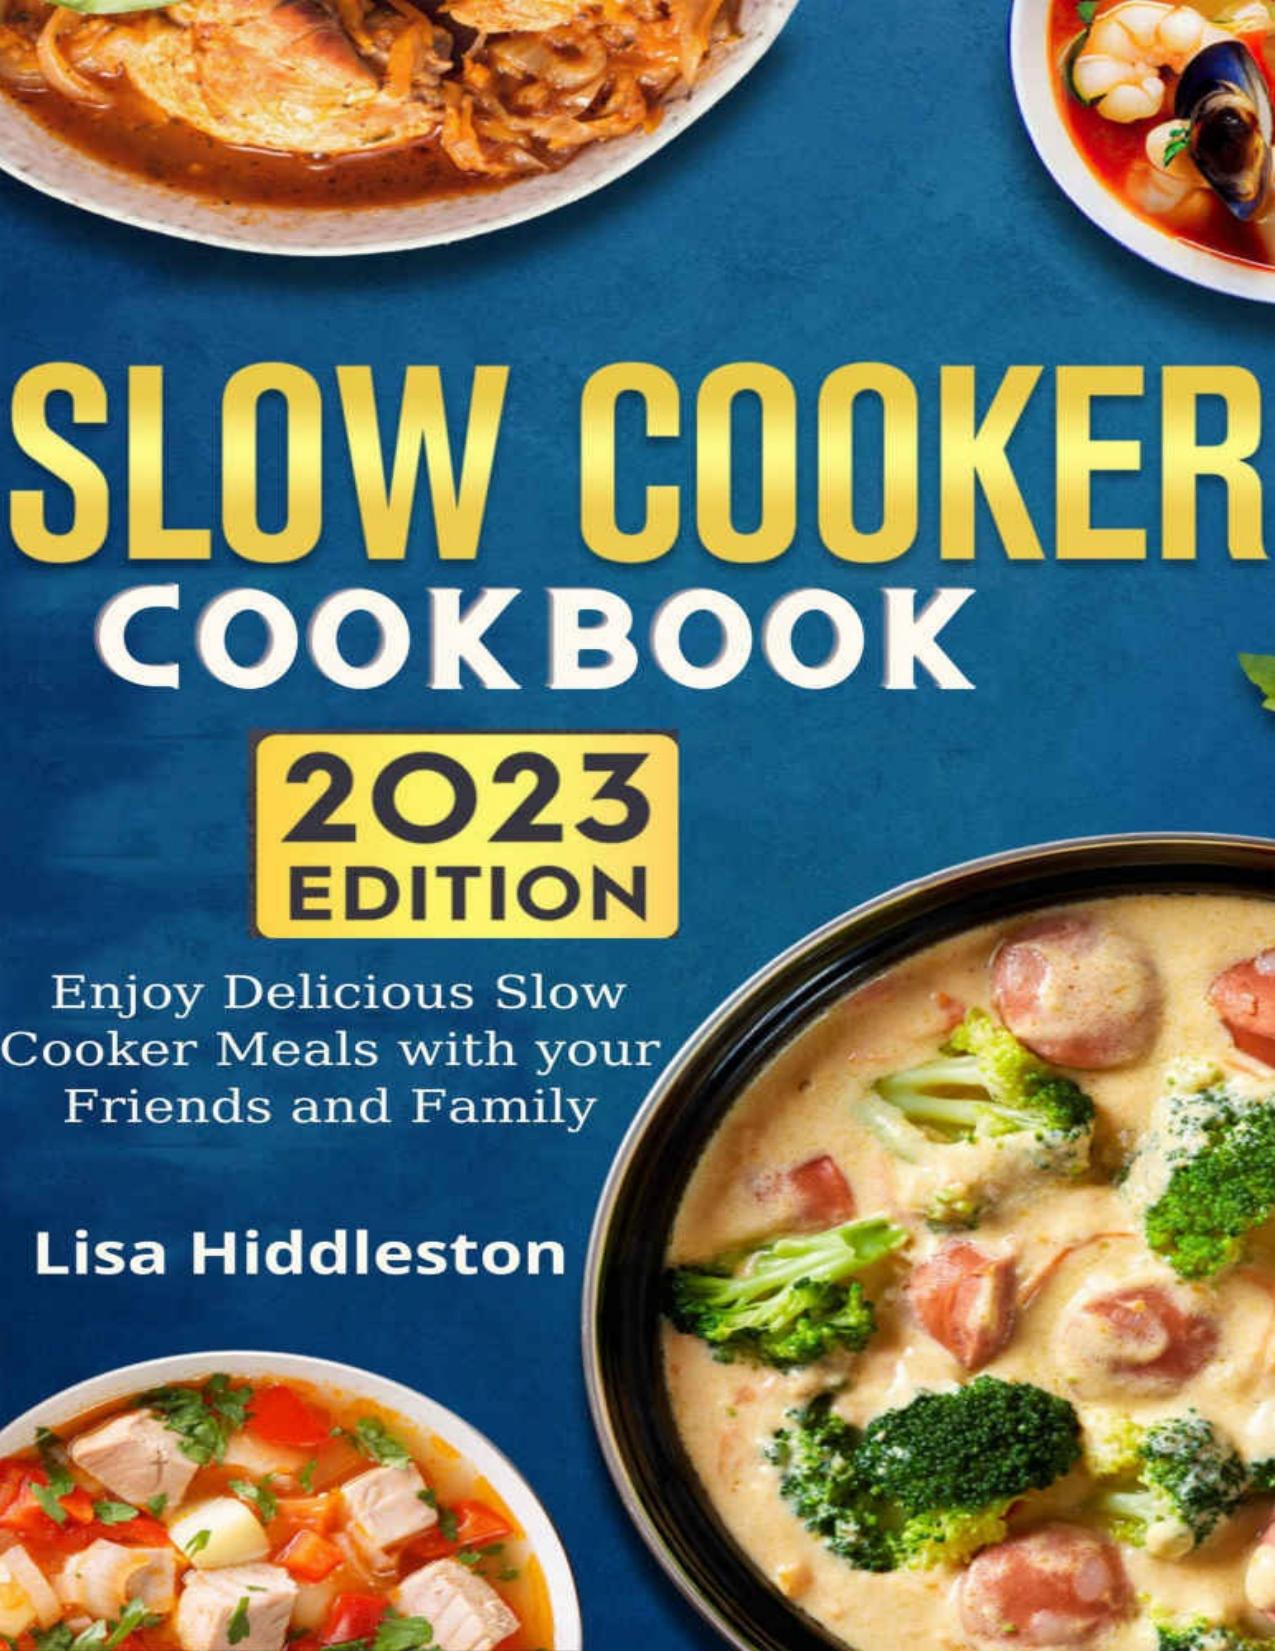 Slow Cooker Cookbook 2023 by Lisa Hiddleston